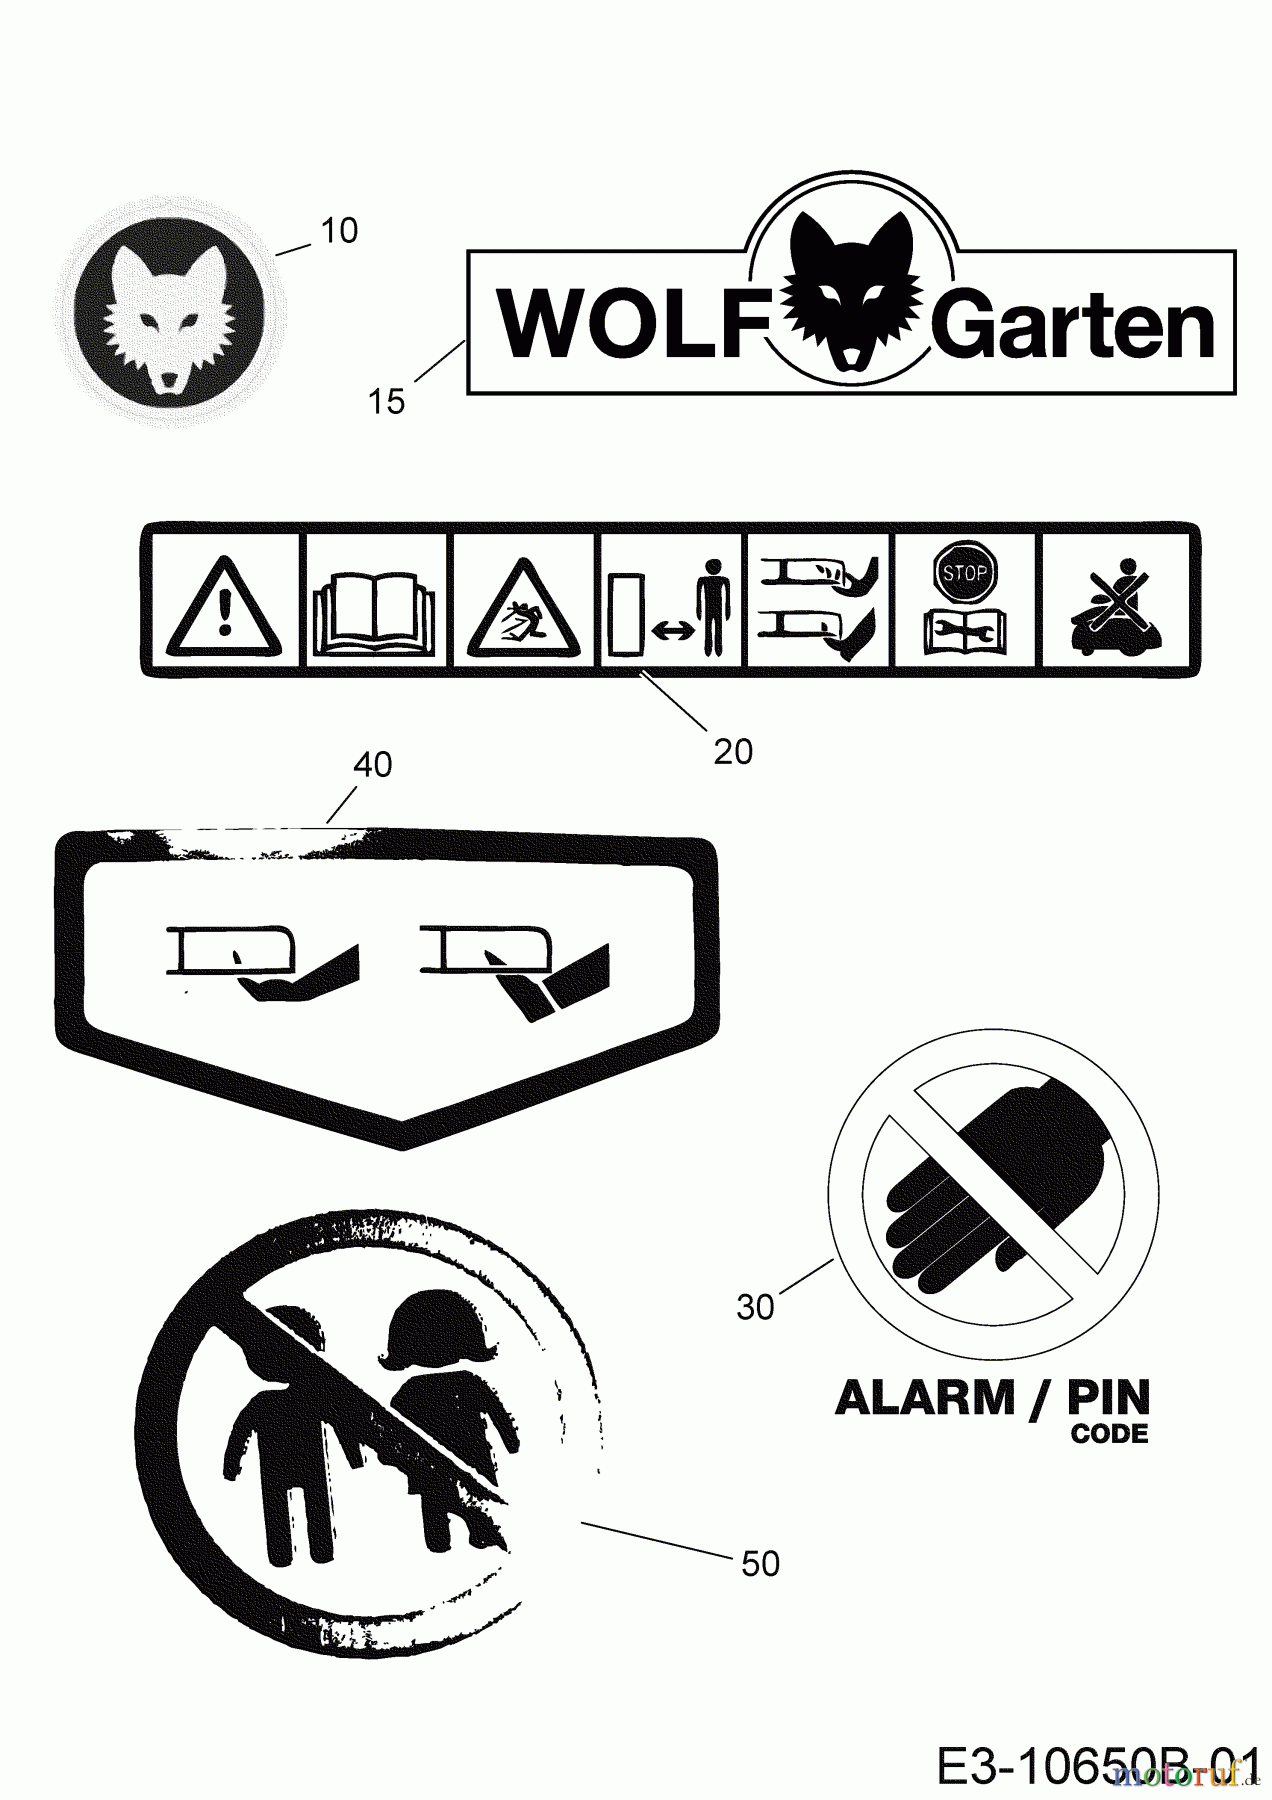  Wolf-Garten Robotic lawn mower Loopo S500 Connect 22AXGA-D650 (2020) Labels